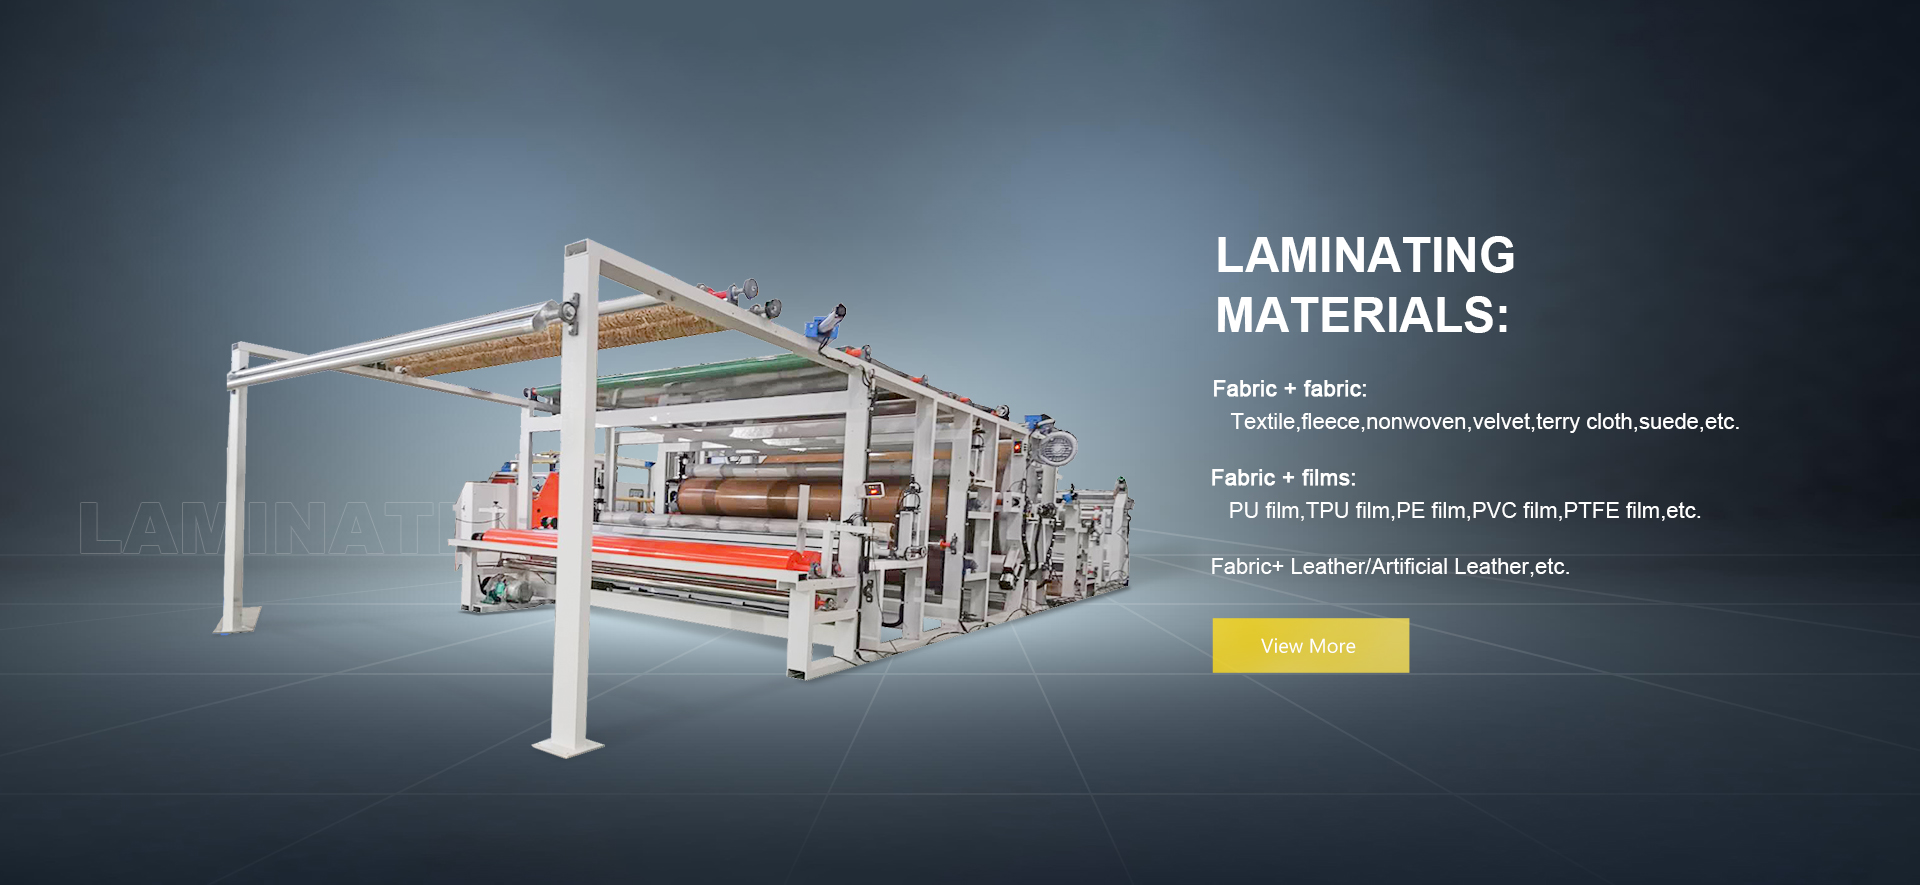 Flame Lamination Machine, Laminating Machine, Foam Laminating Services - XINLILONG LIGHT